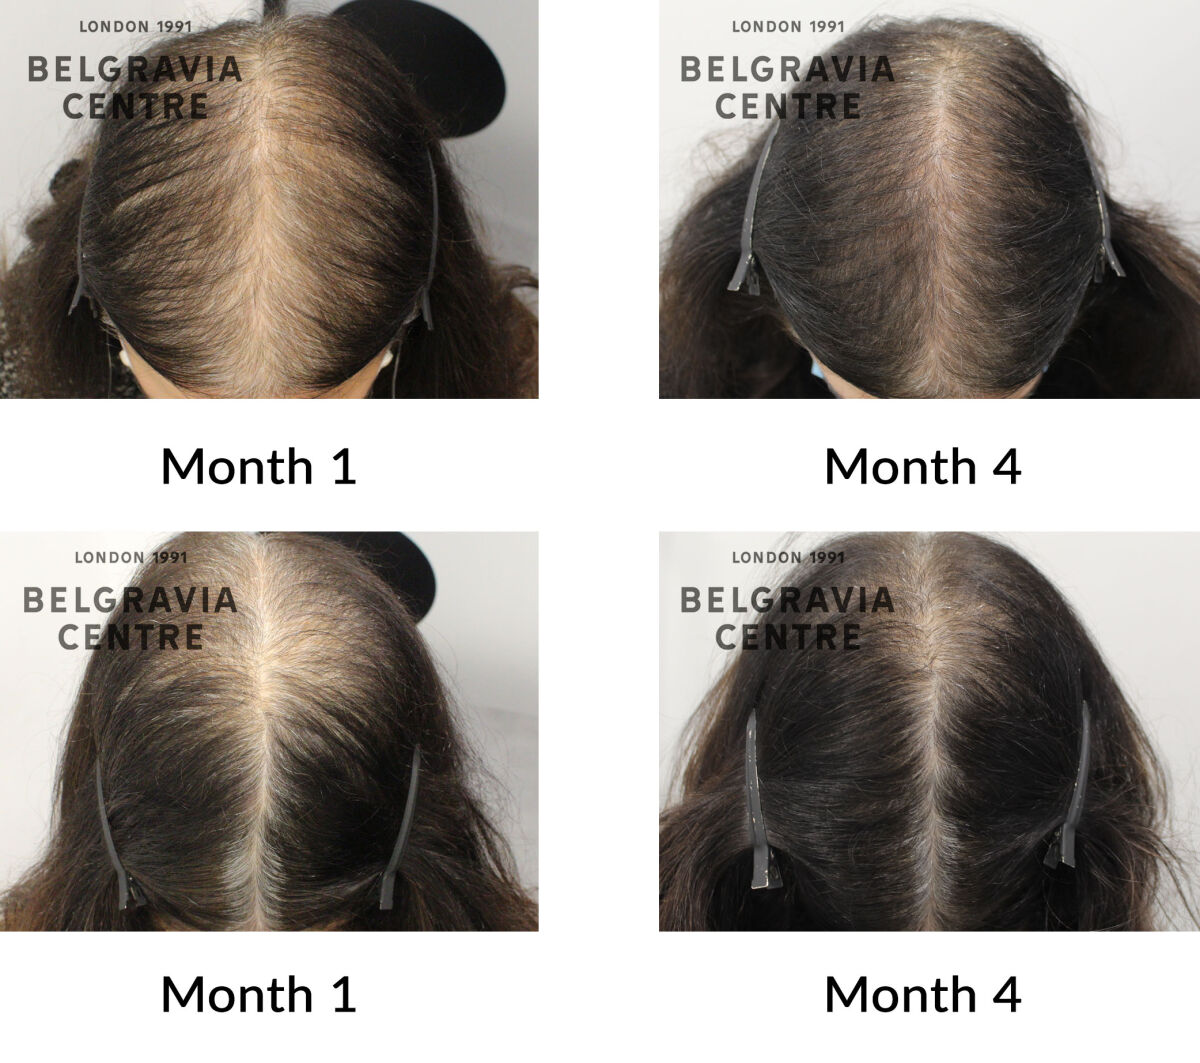 female pattern hair loss the belgravia centre 429641